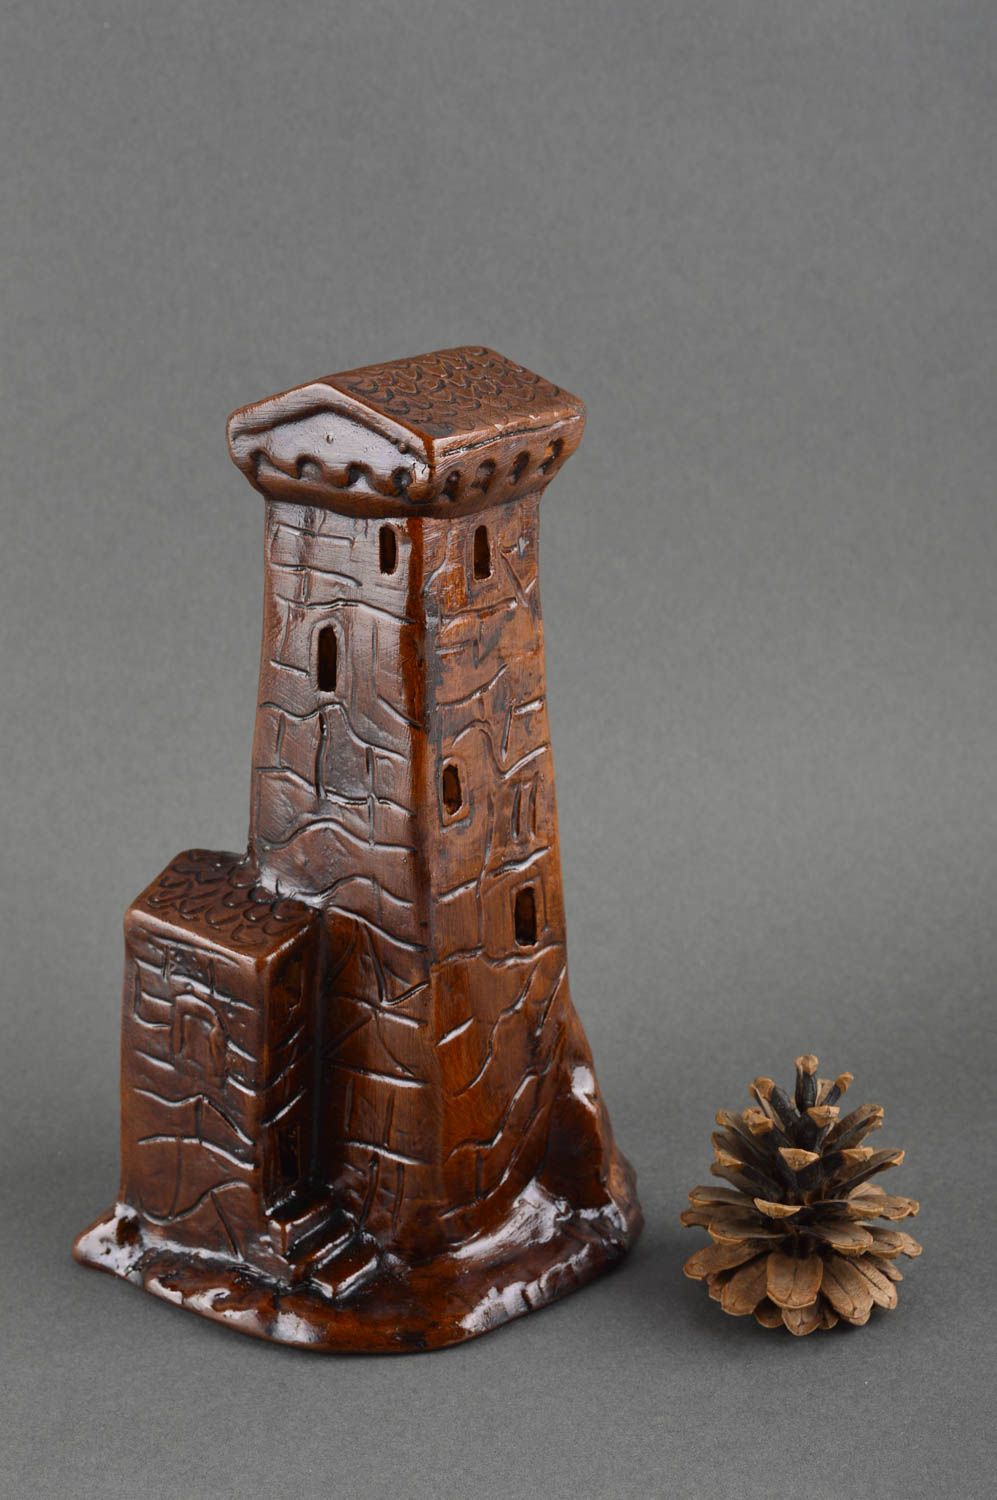 Handmade Keramik Deko Figur aus Ton Wohnzimmer Deko Swanischer Turm Geschenk foto 1